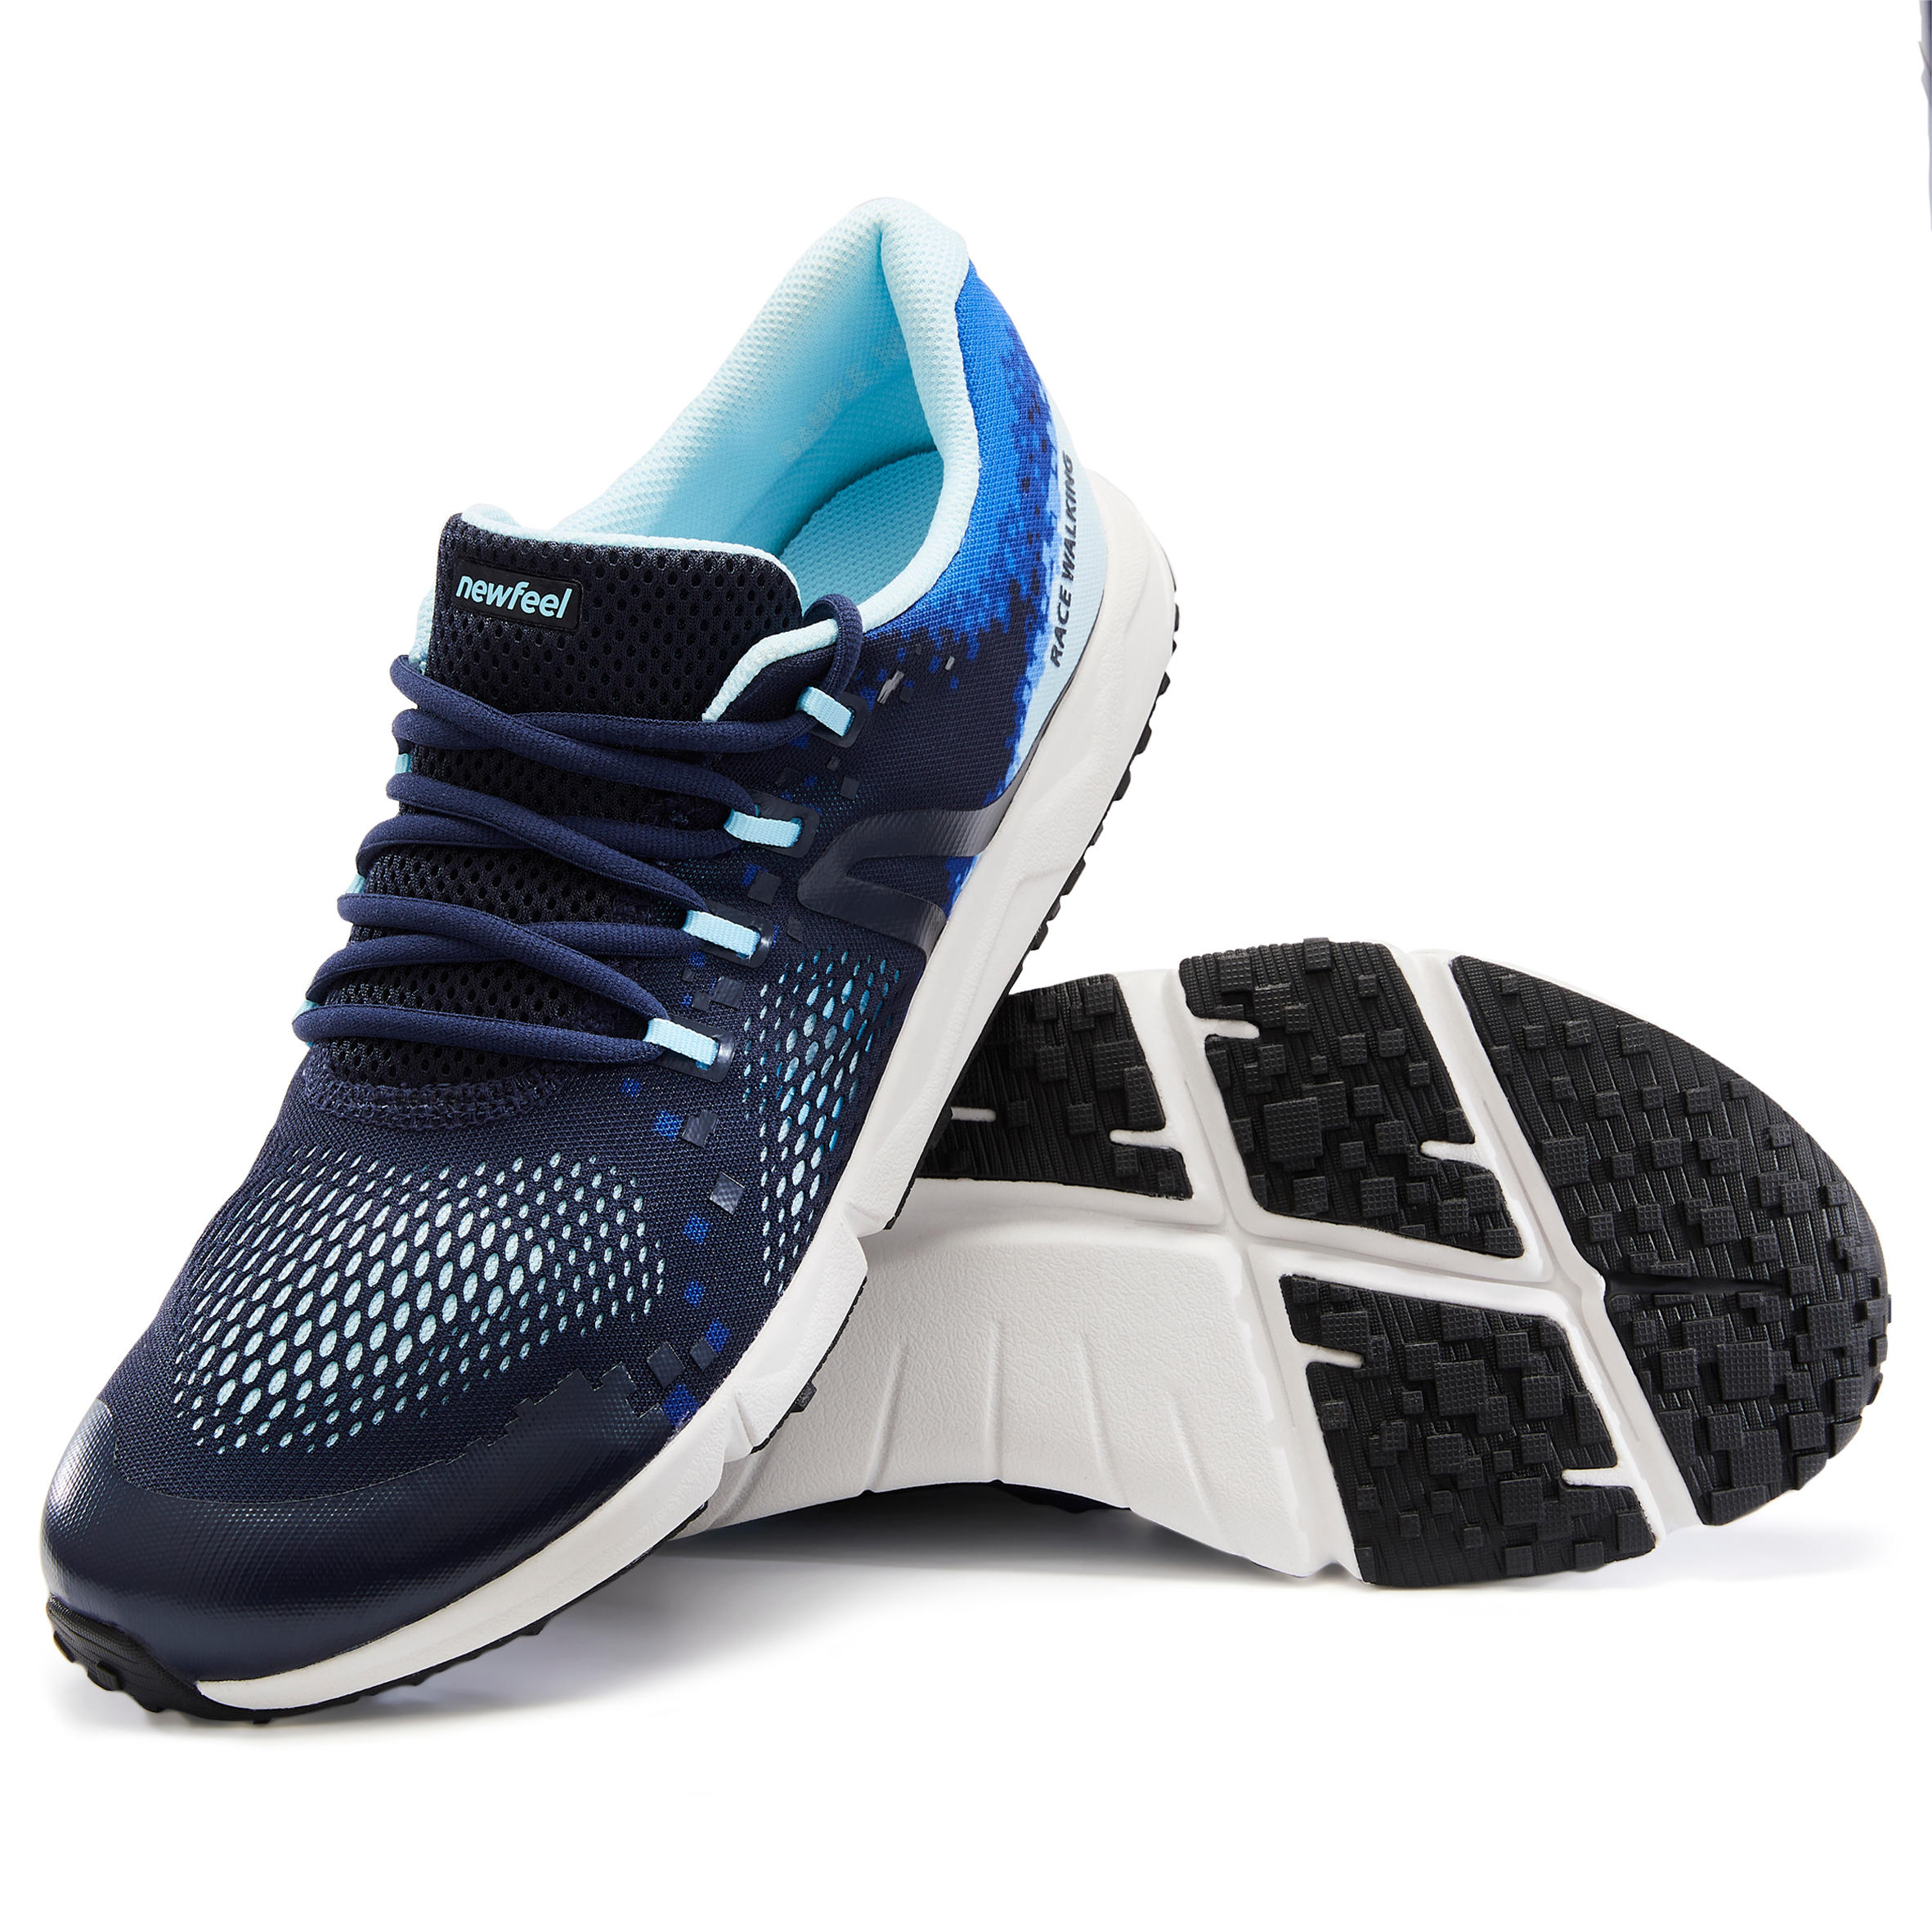 RW 500 fitness walking shoes - blue 7/9